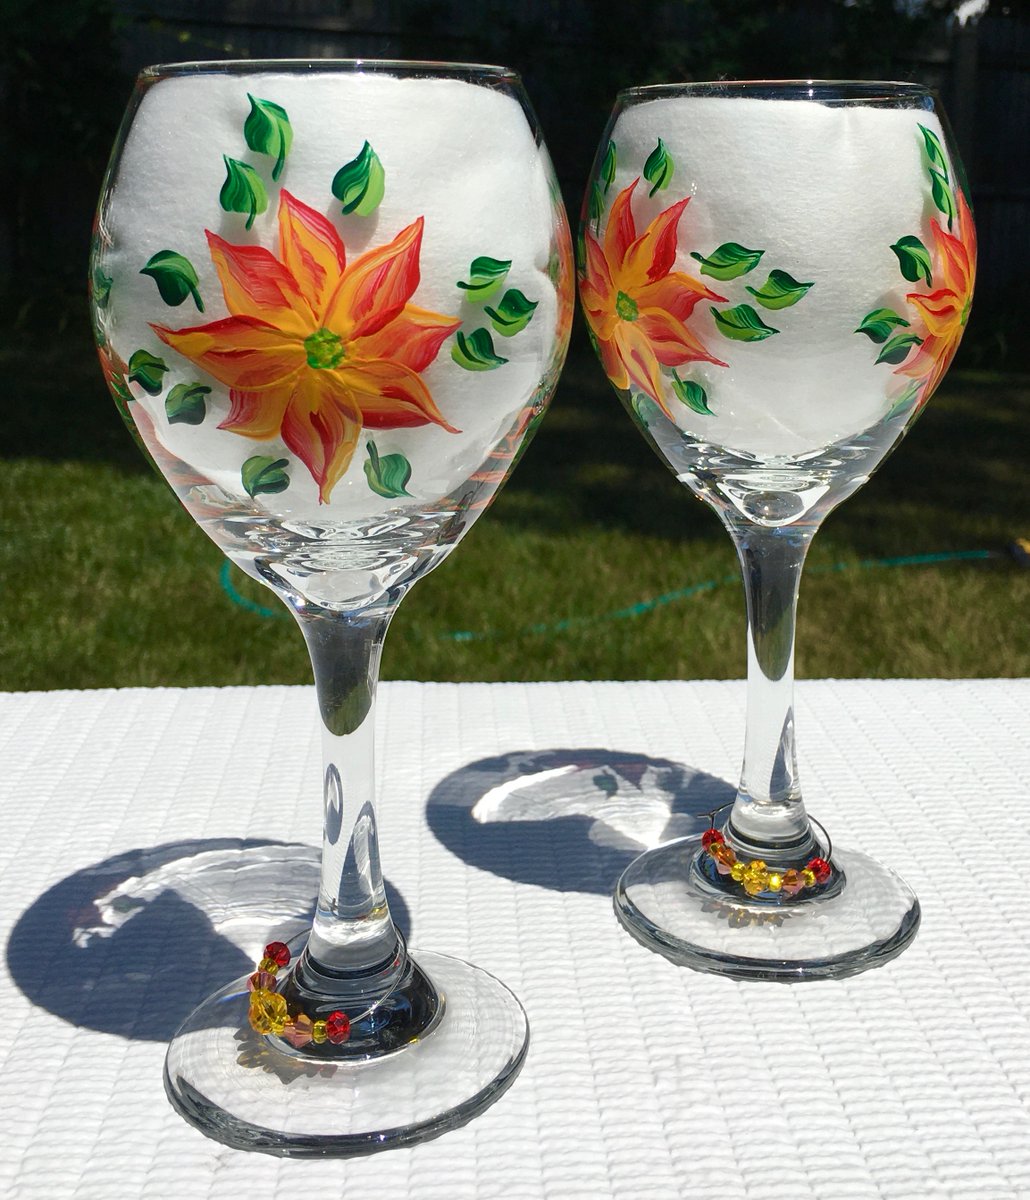 Cool gift for Mom etsy.com/listing/834904… #mothersdaygift #wineglasses #paintedglasses #SMILEtt23 #CraftBizParty #etsystore #etsyshop